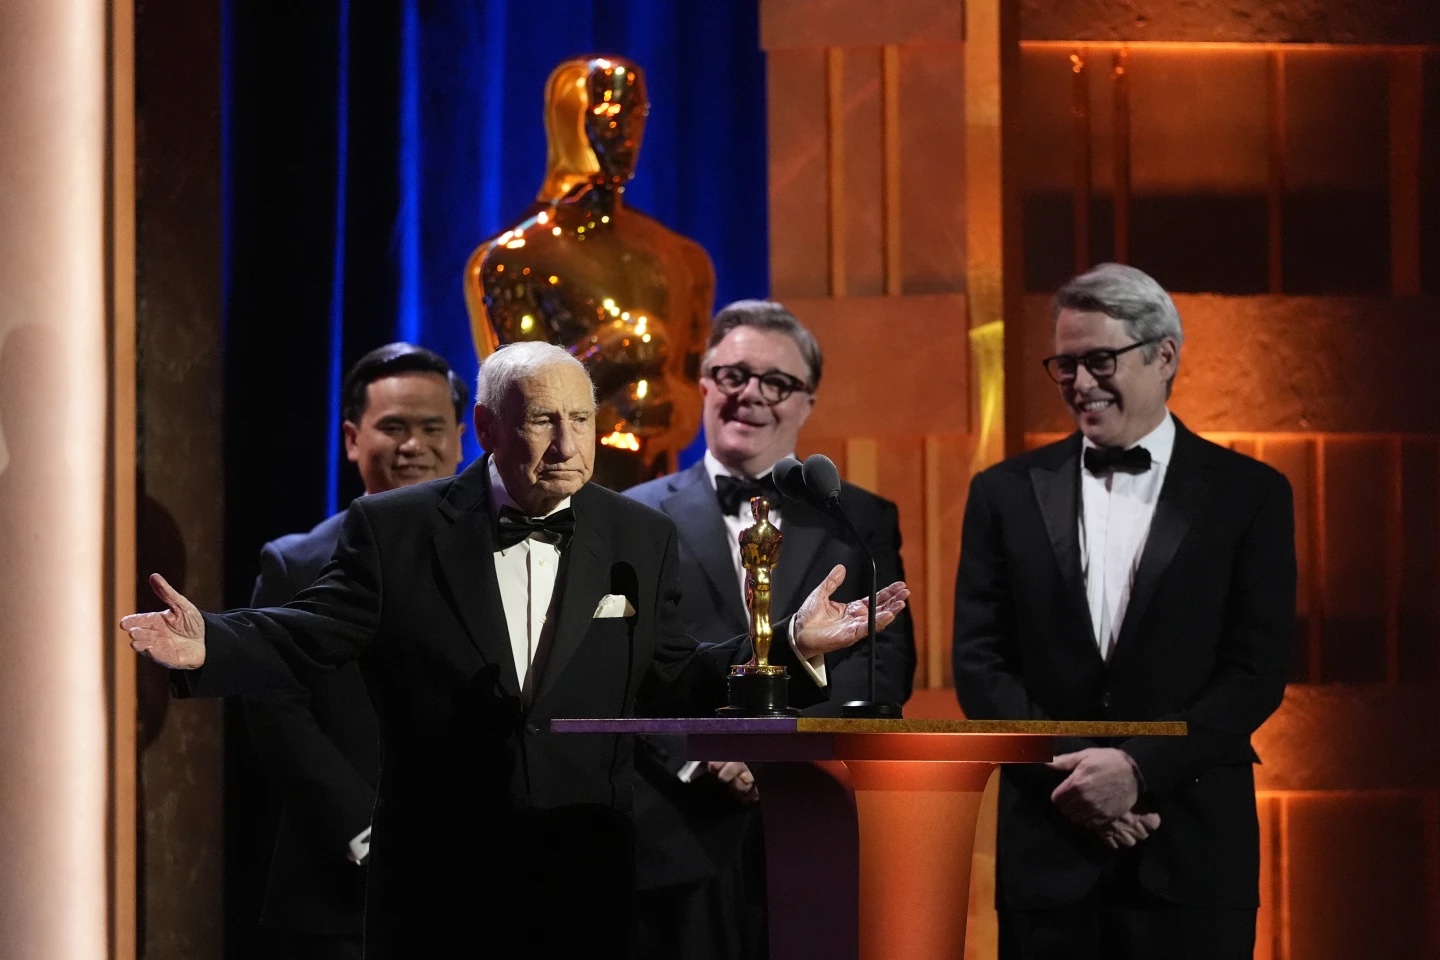 "Prometo no vender este" dijo Mel Brooks al recibir Premio Oscar